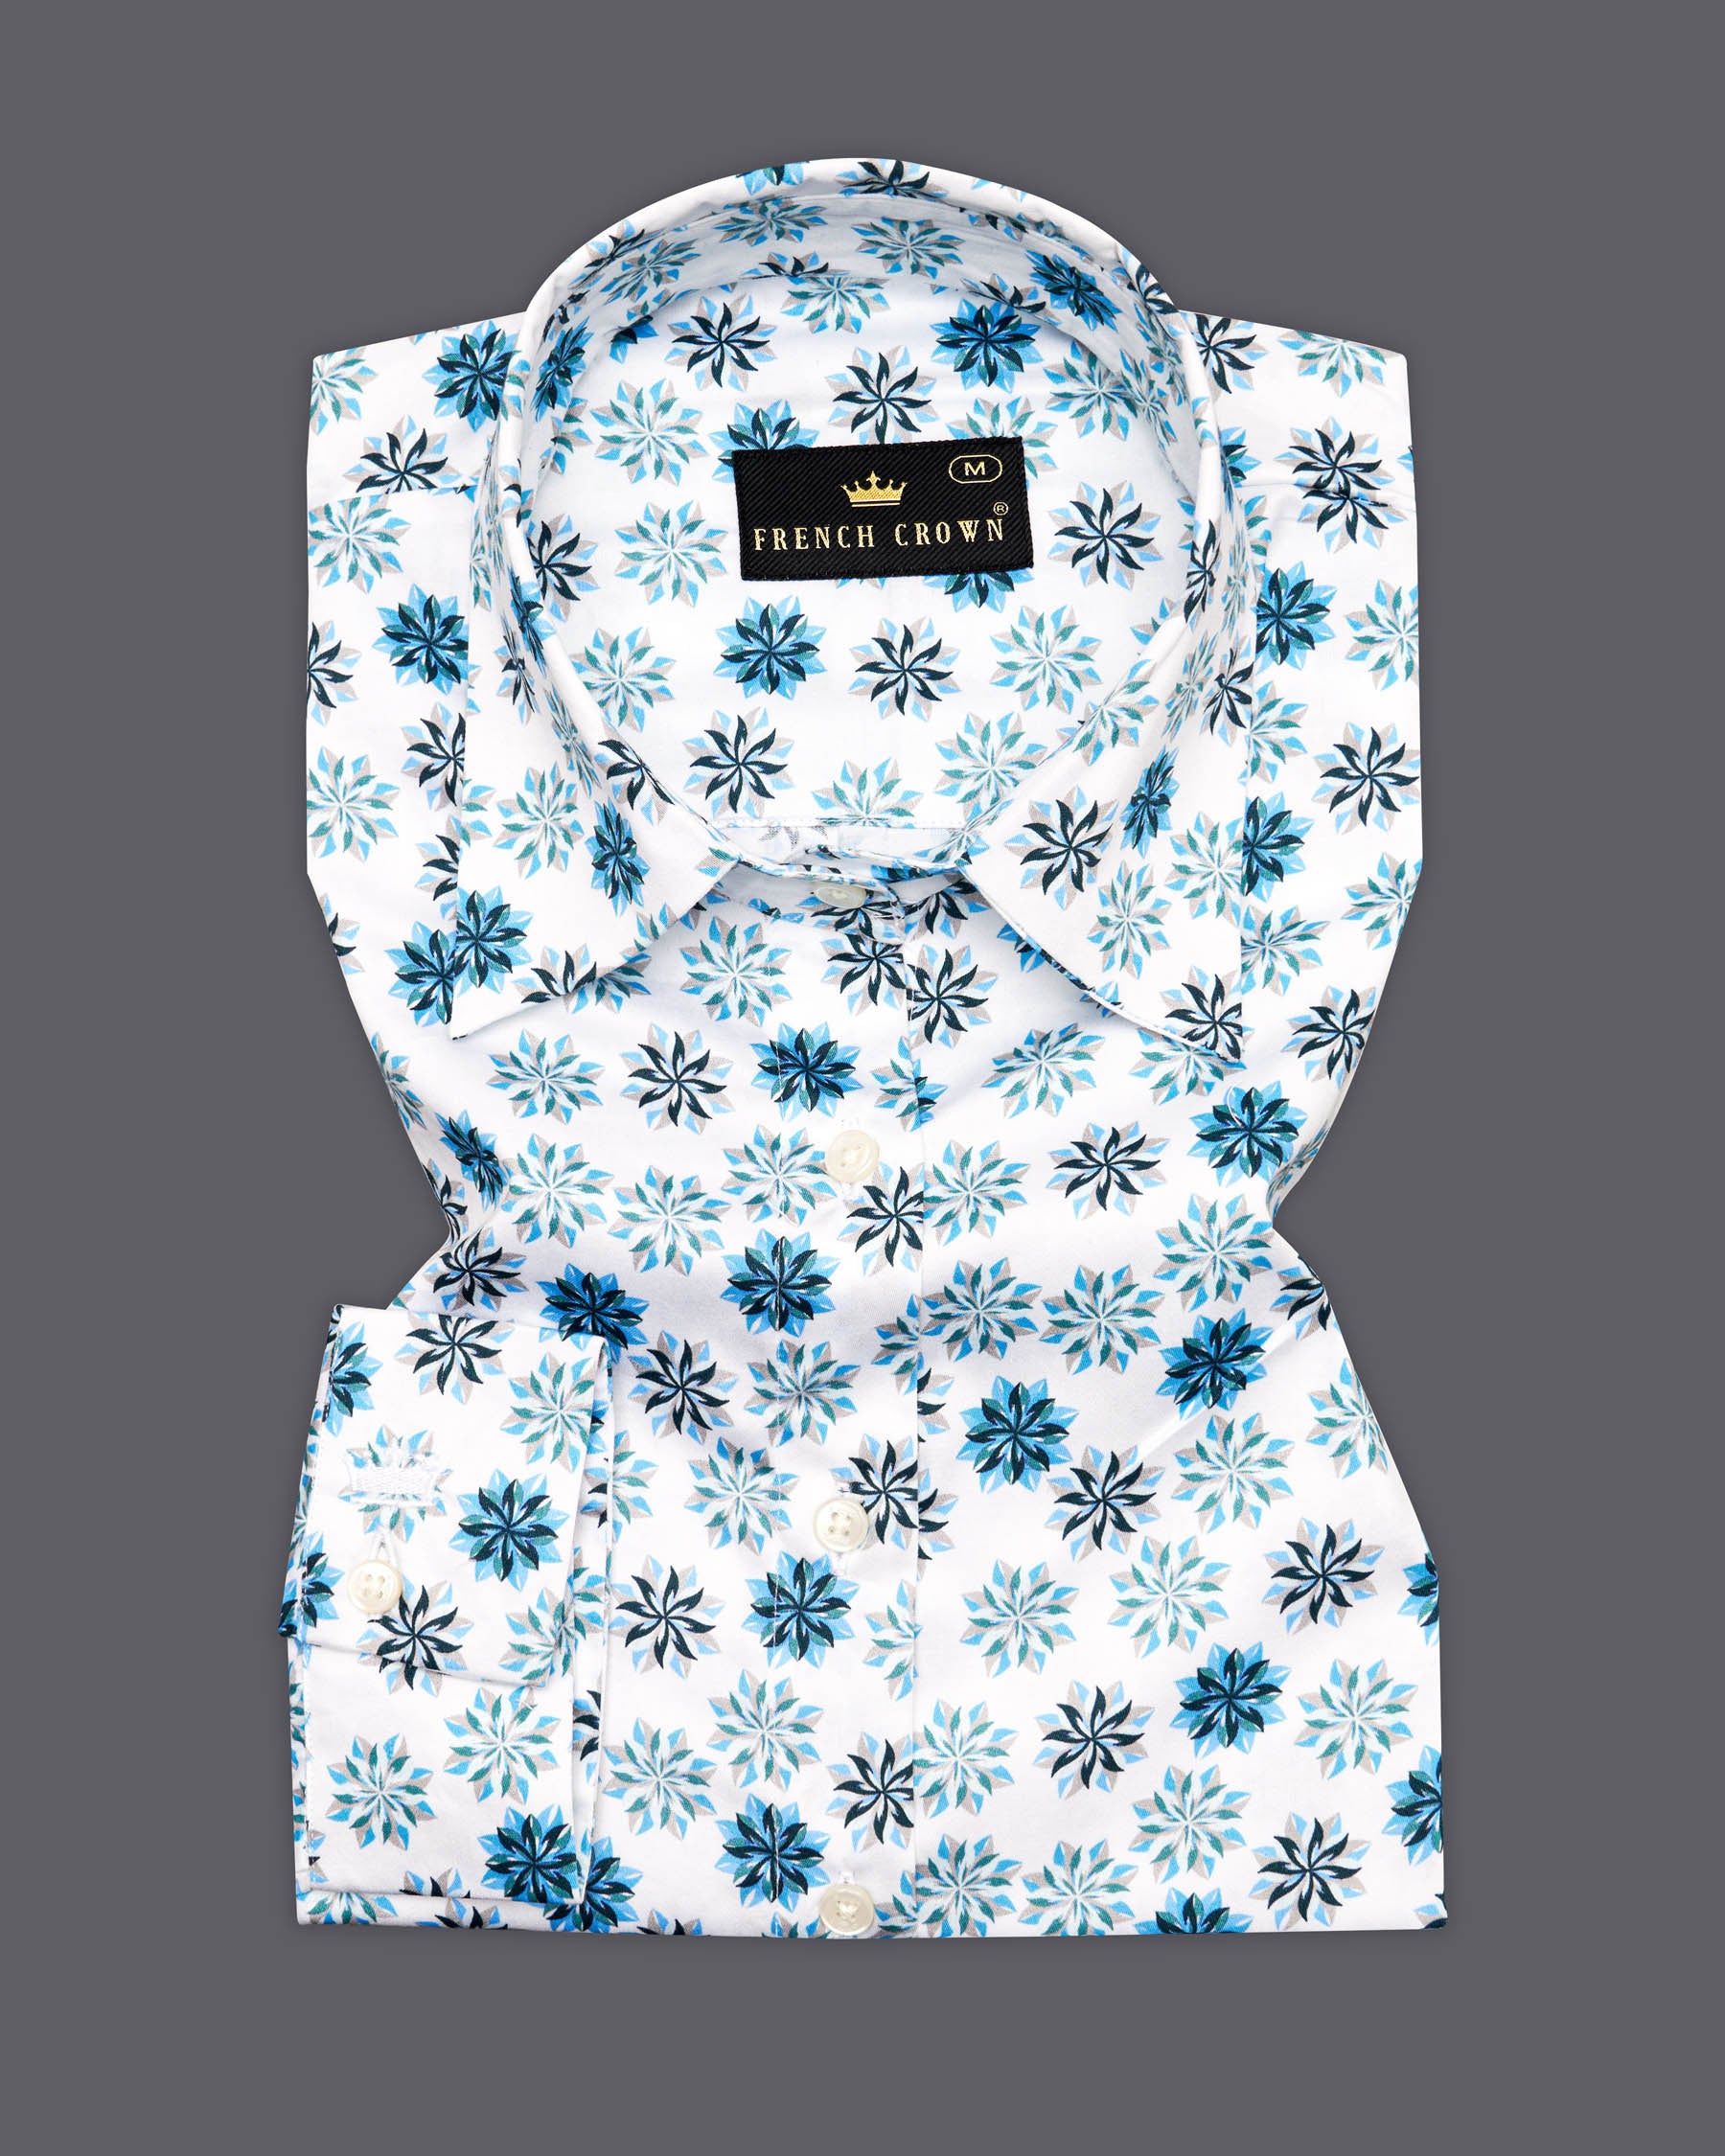 Bright White with Curious Blue Printed Super Soft Premium Cotton Women’s Shirt WS057-32, WS057-34, WS057-36, WS057-38, WS057-40, WS057-42